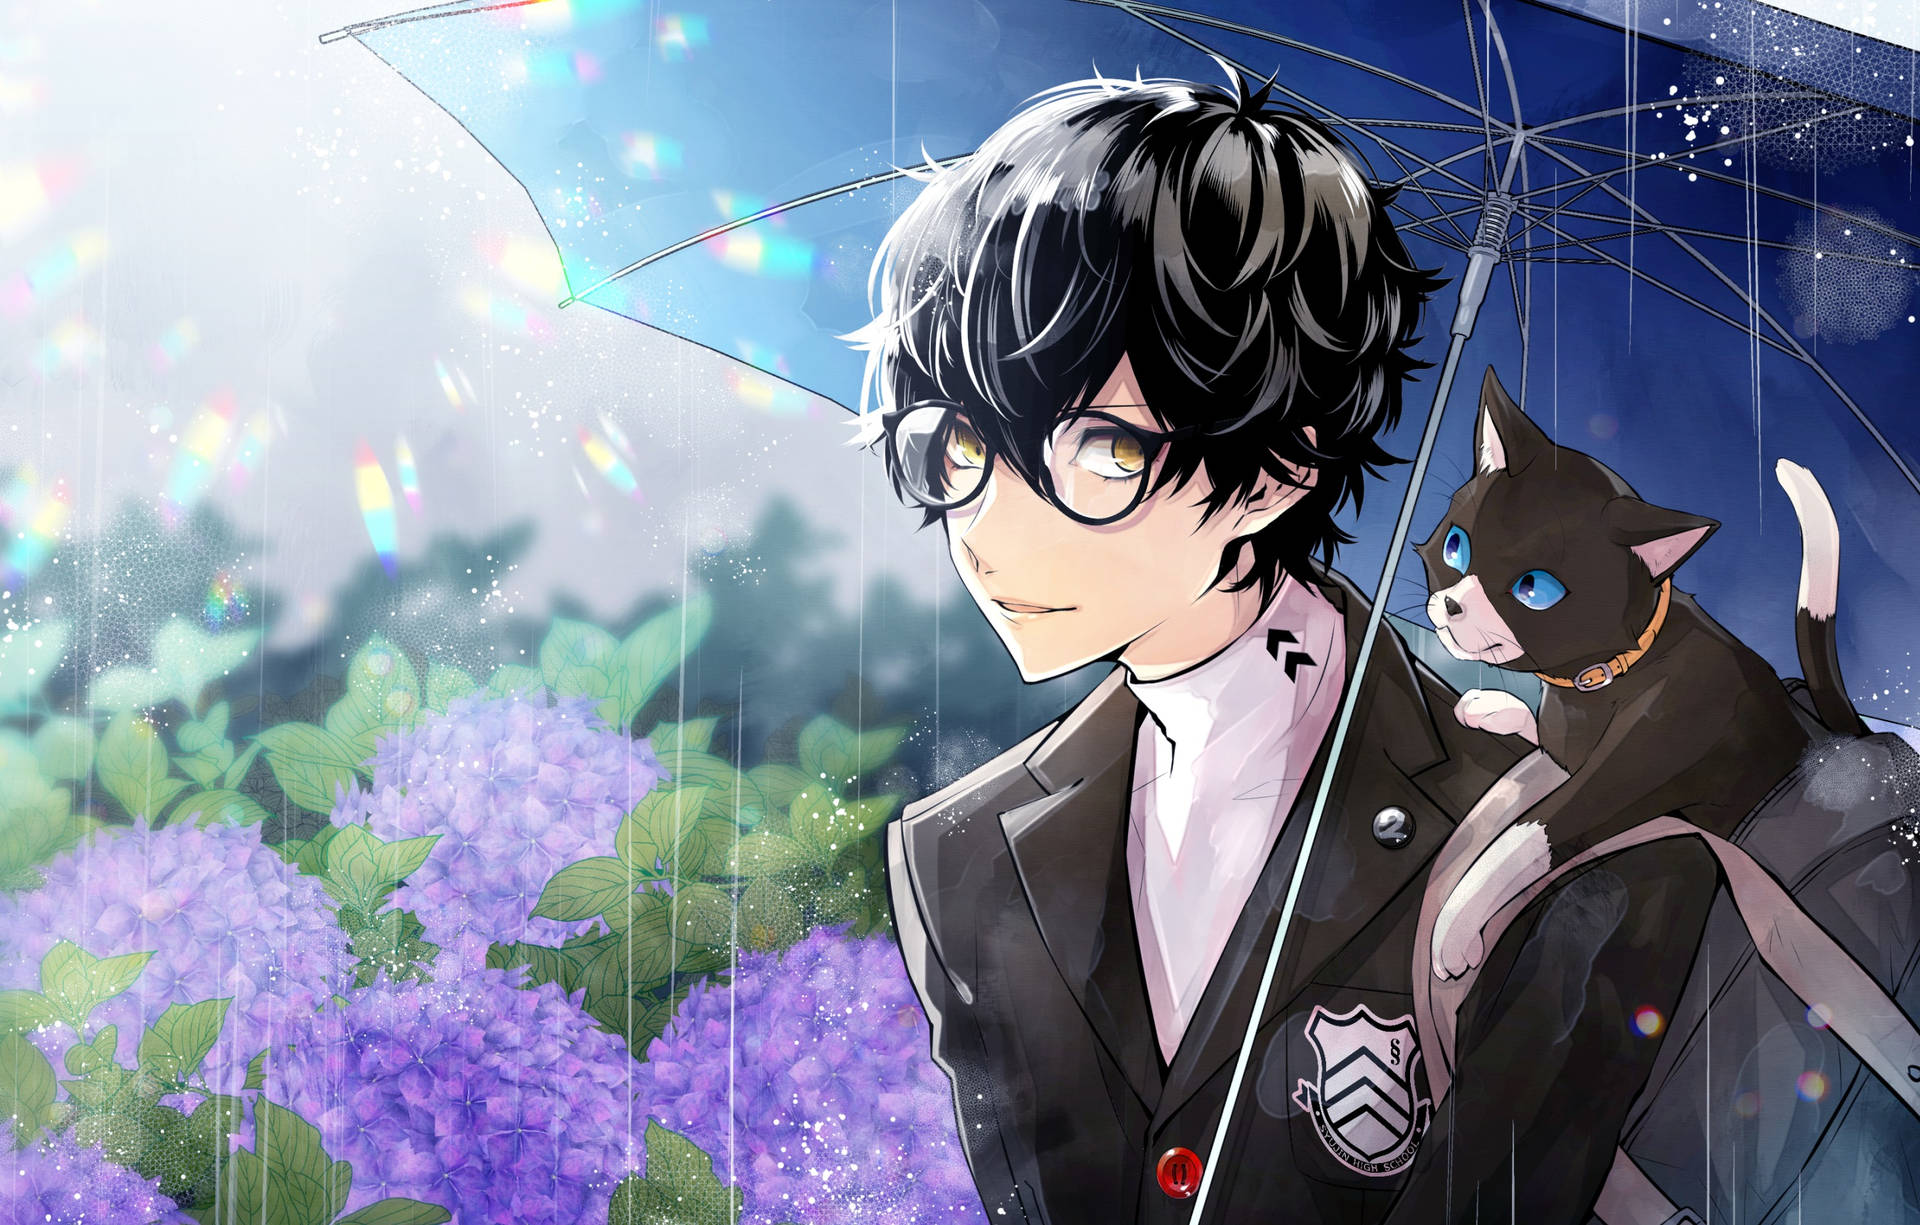 Ren Amamiya With Umbrella Wallpaper